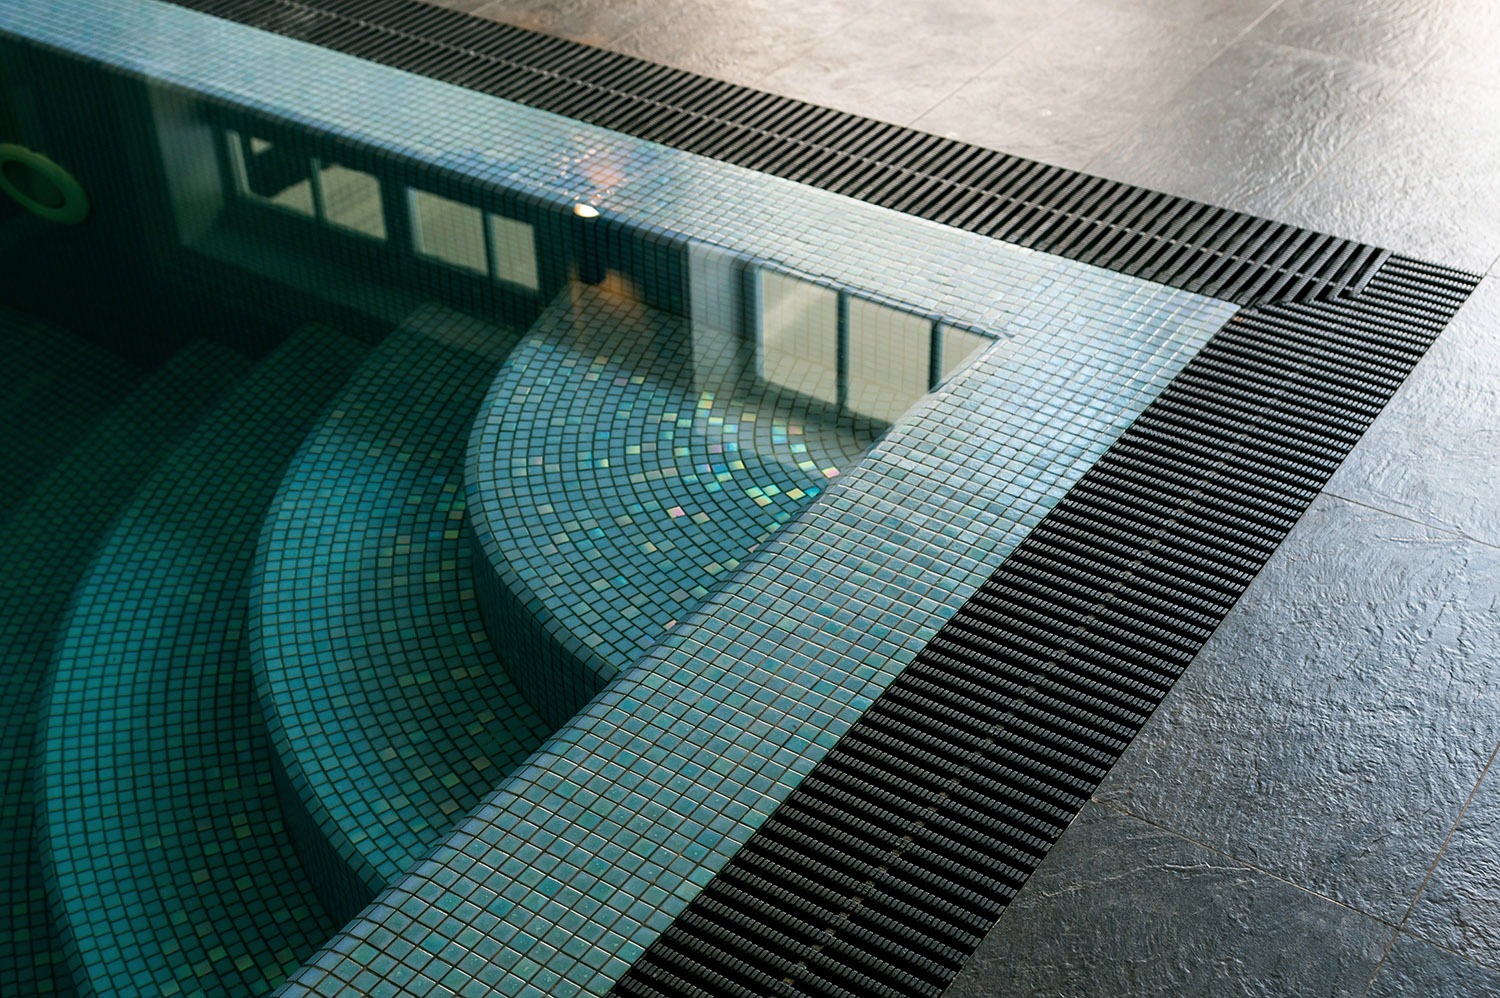 Corner of pool with tile steps